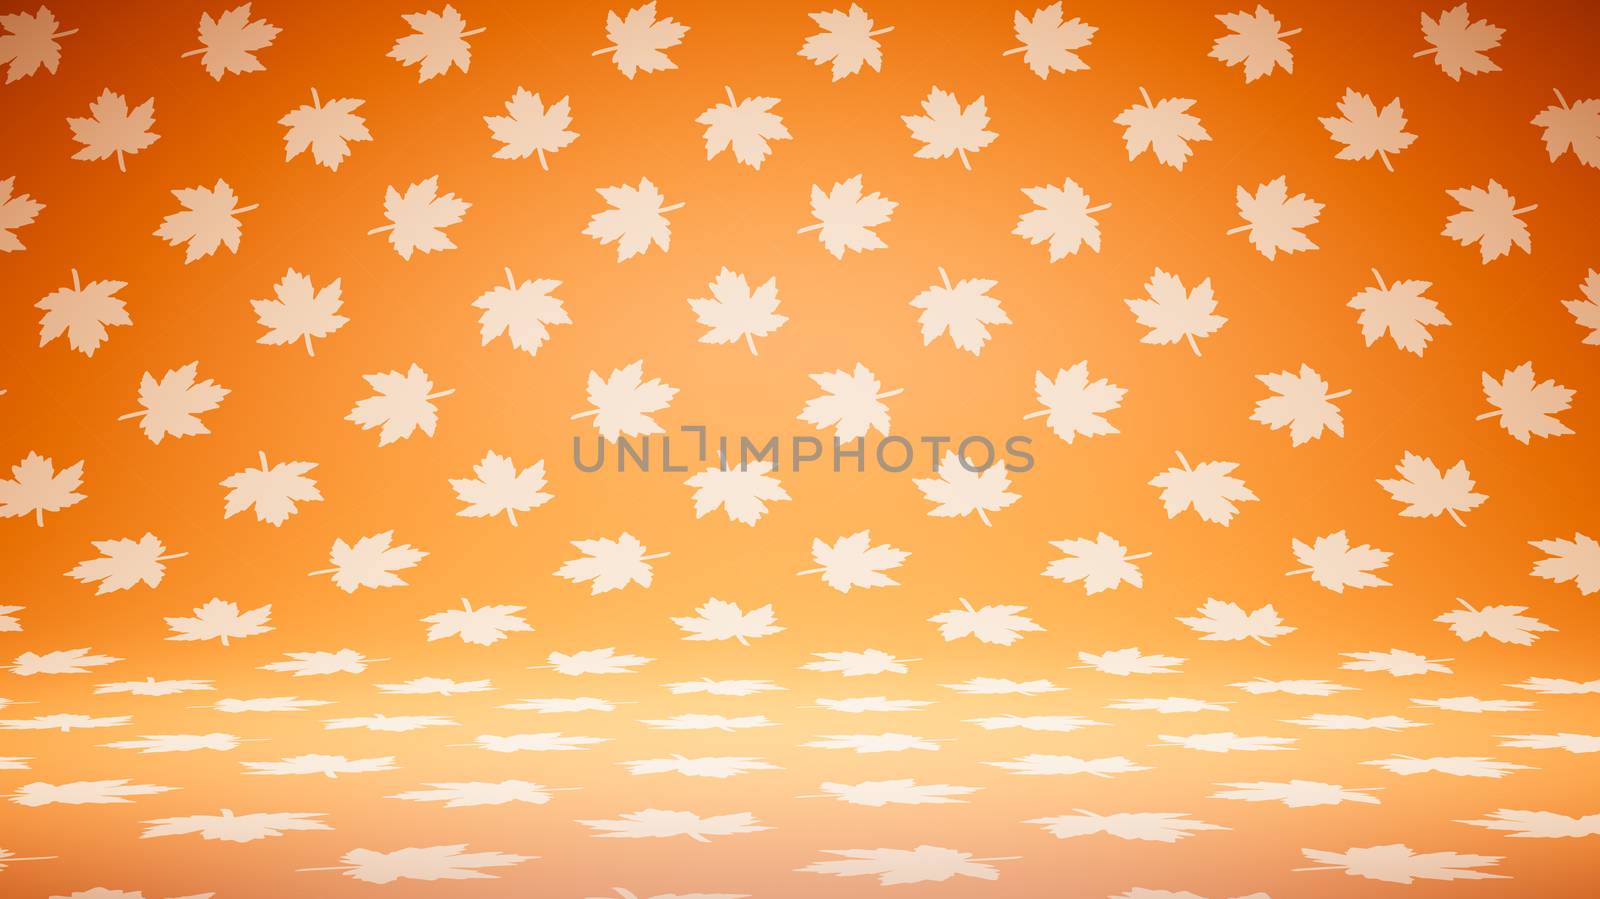 Empty Blank Orange and White Leaves Pattern Studio Background 3D Render Illustration